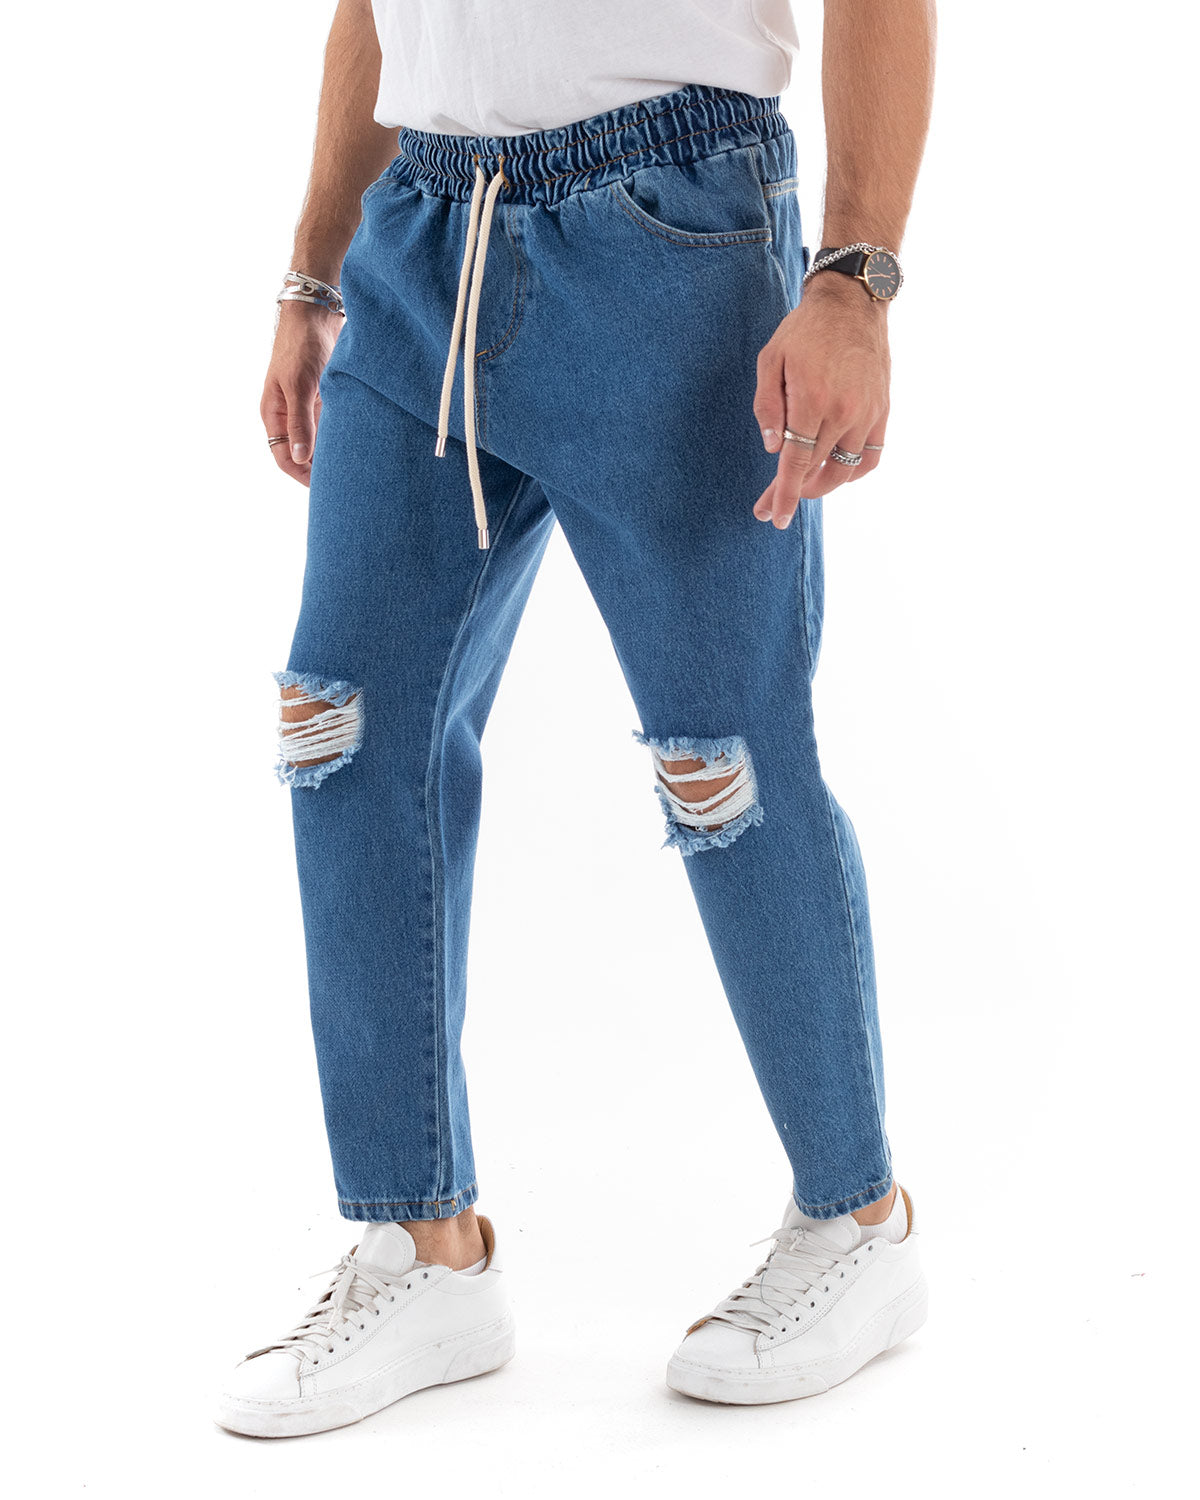 Men's Jeans Trousers Regular Fit Denim Basic Casual Knee-Length Cut GIOSAL-P5523A